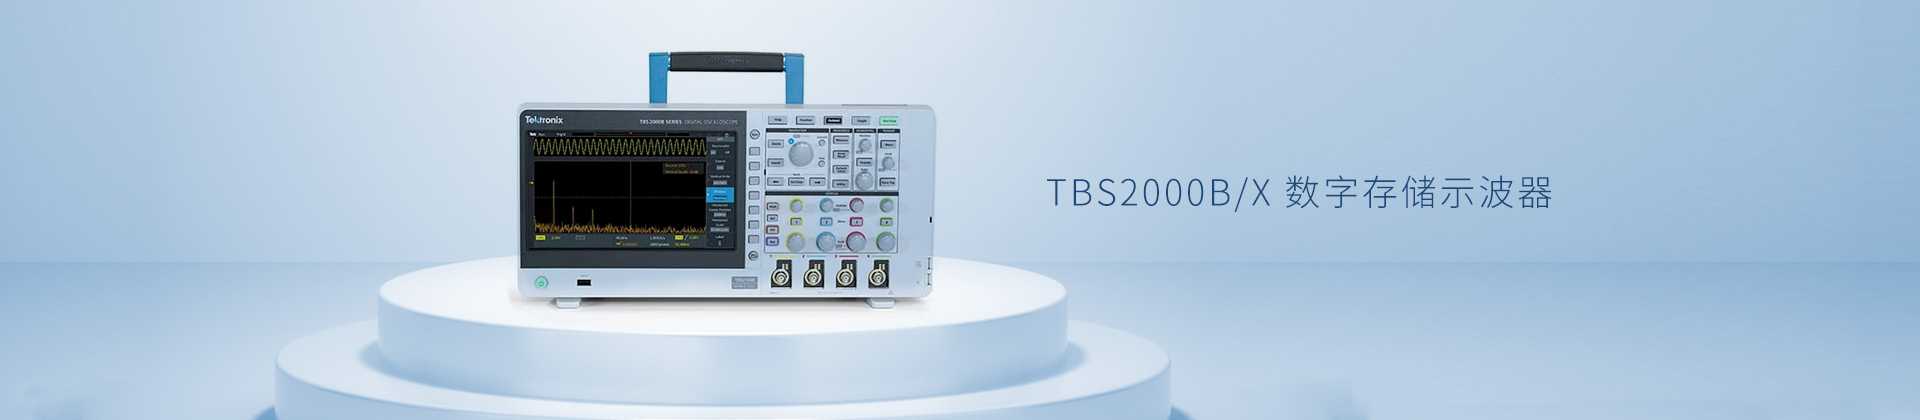 TBS2000B/X 数字存储示波器